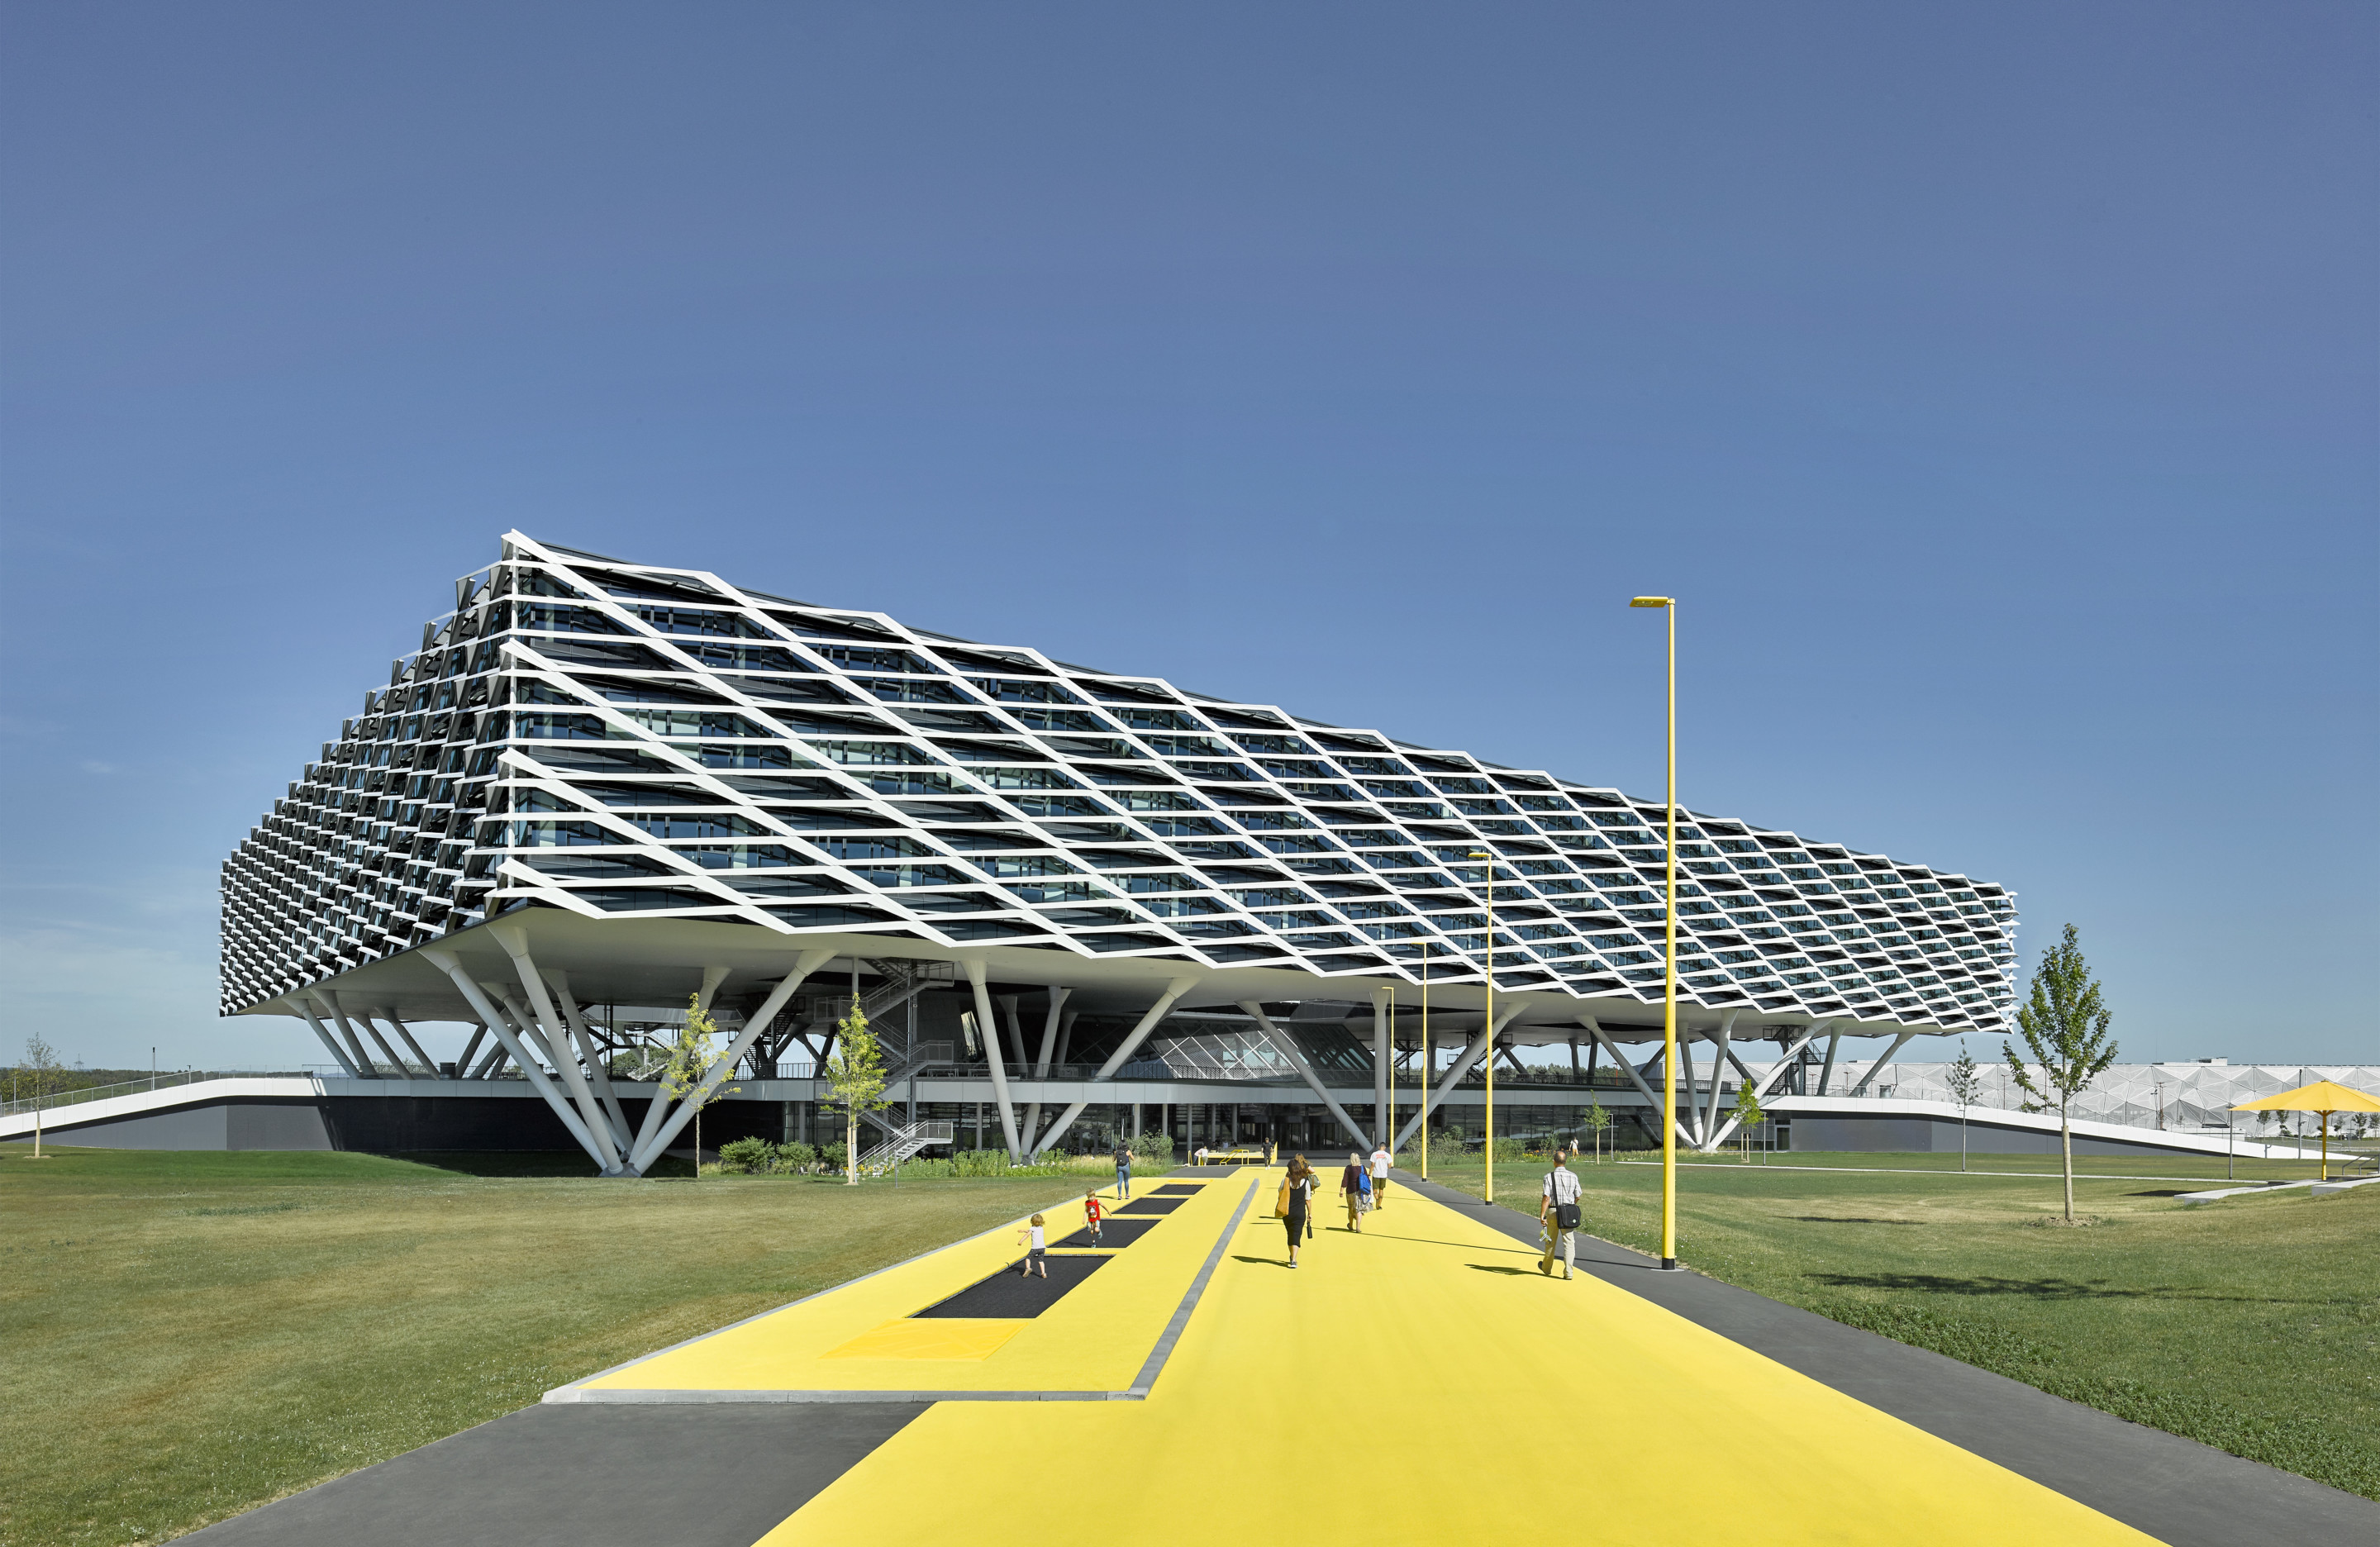 Architekten's Adidas World Sports Arena balances views shading with an aluminum